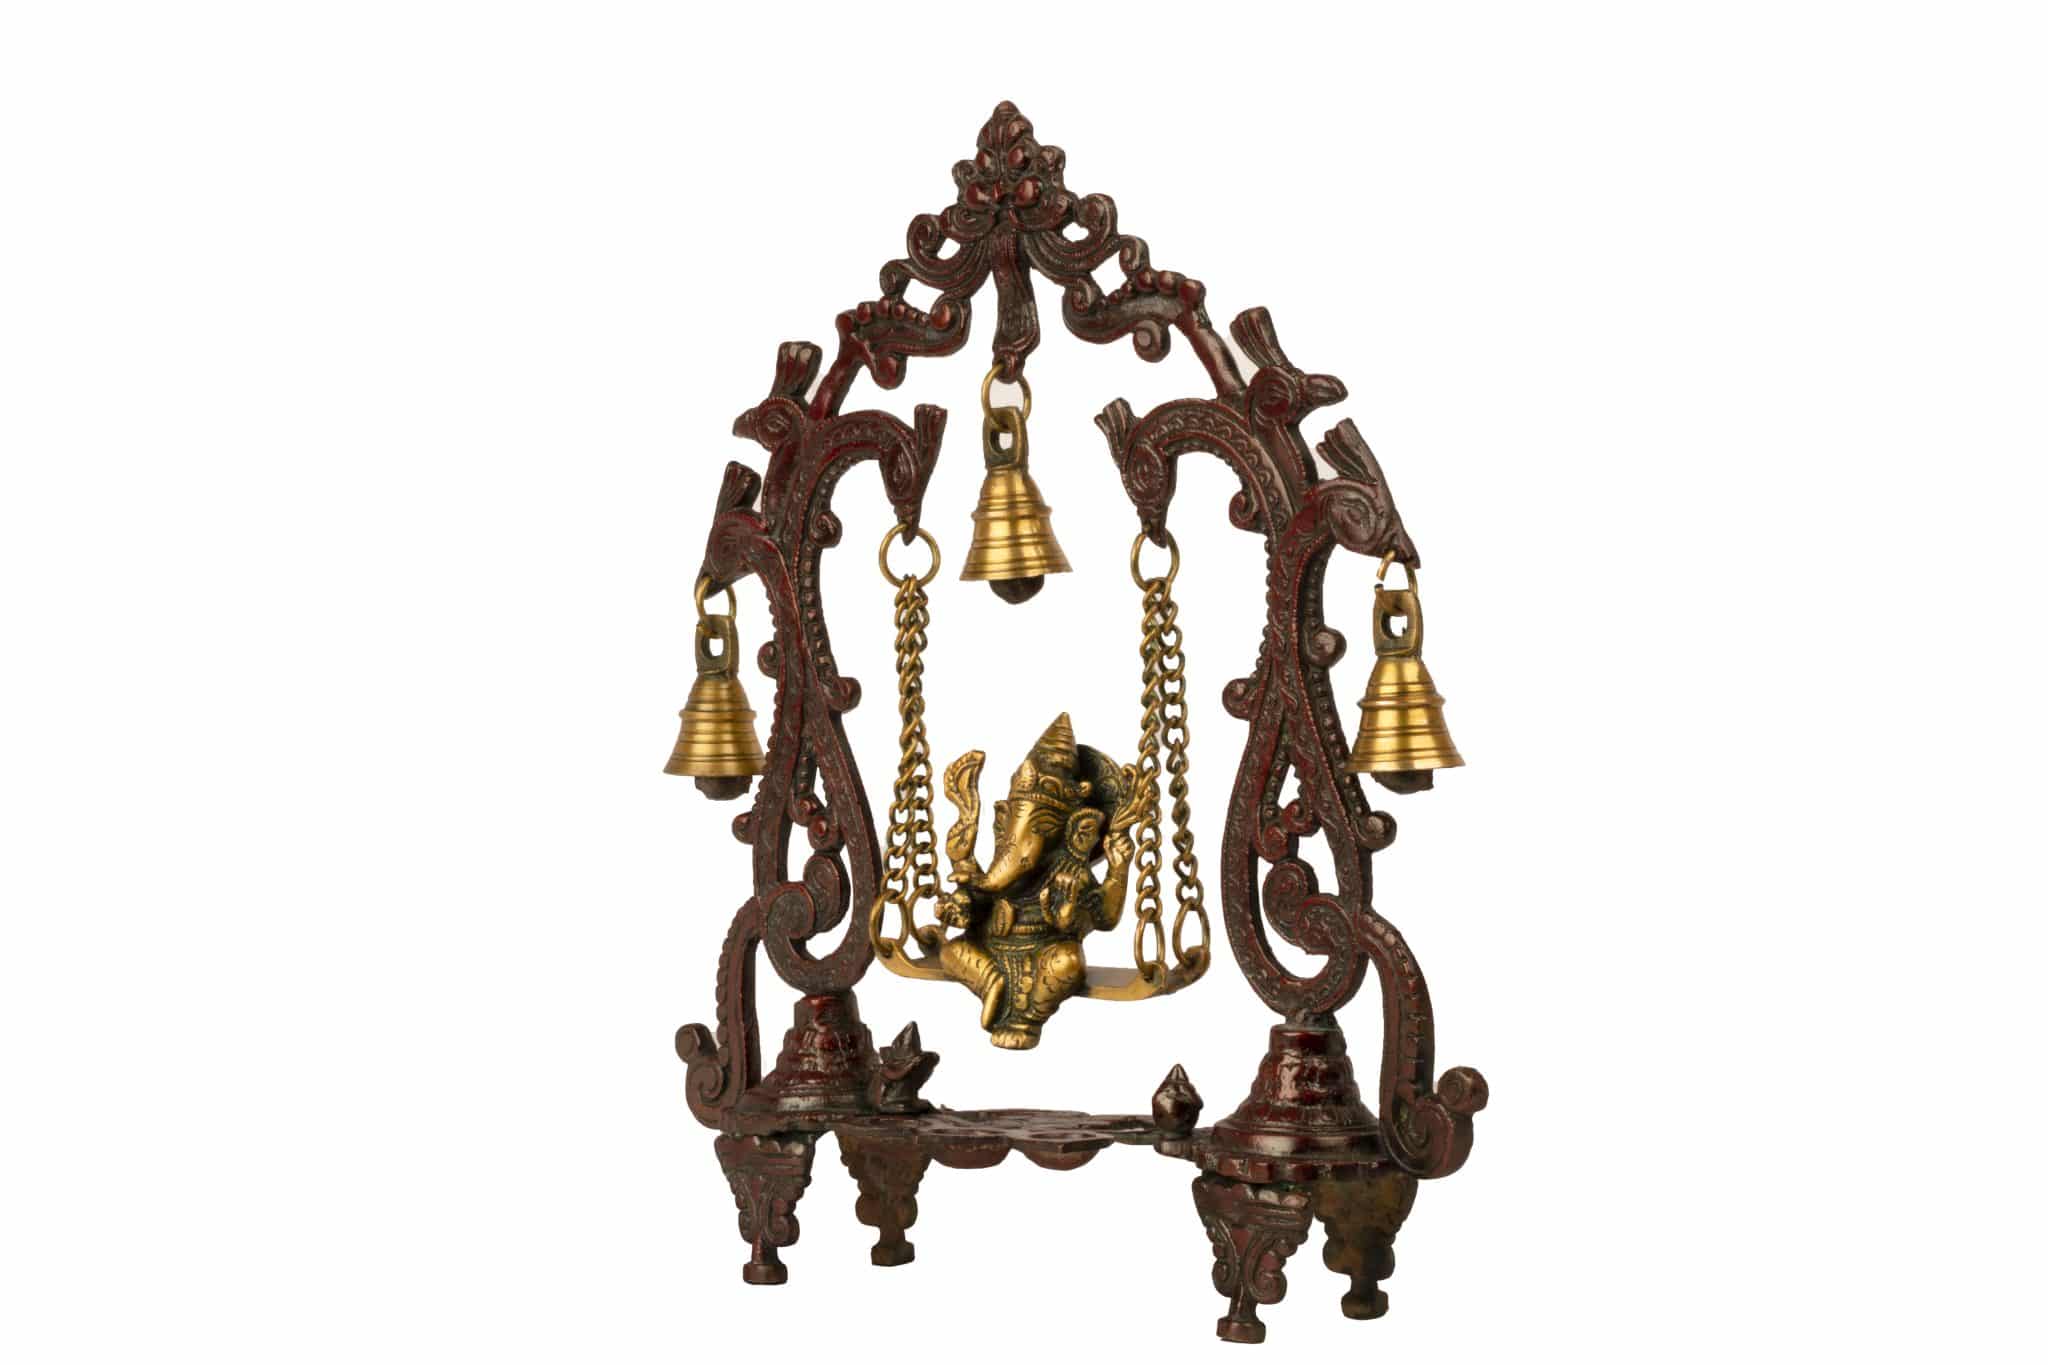 Mohanjodero Brass Lord Ganesha on Swing Idol/Lord Ganesha Statue in Antique Brown finish